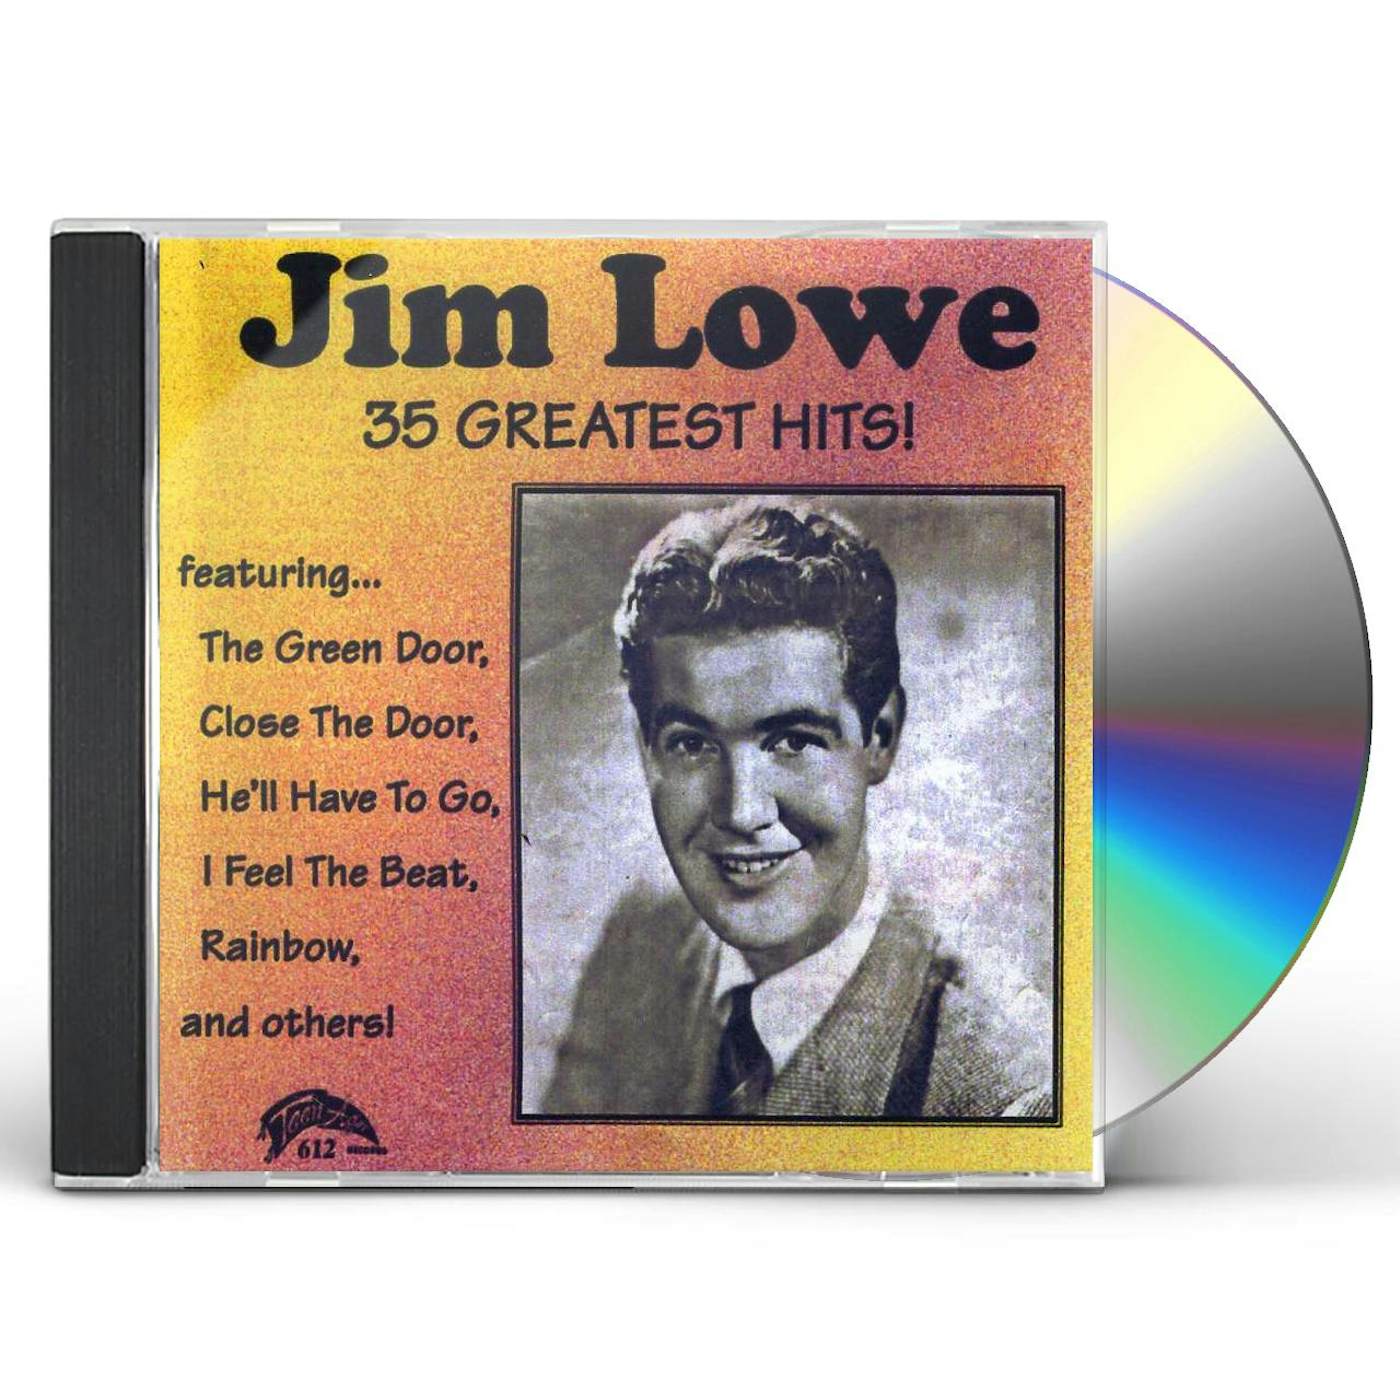 Jim Lowe 35 GREATEST HITS CD